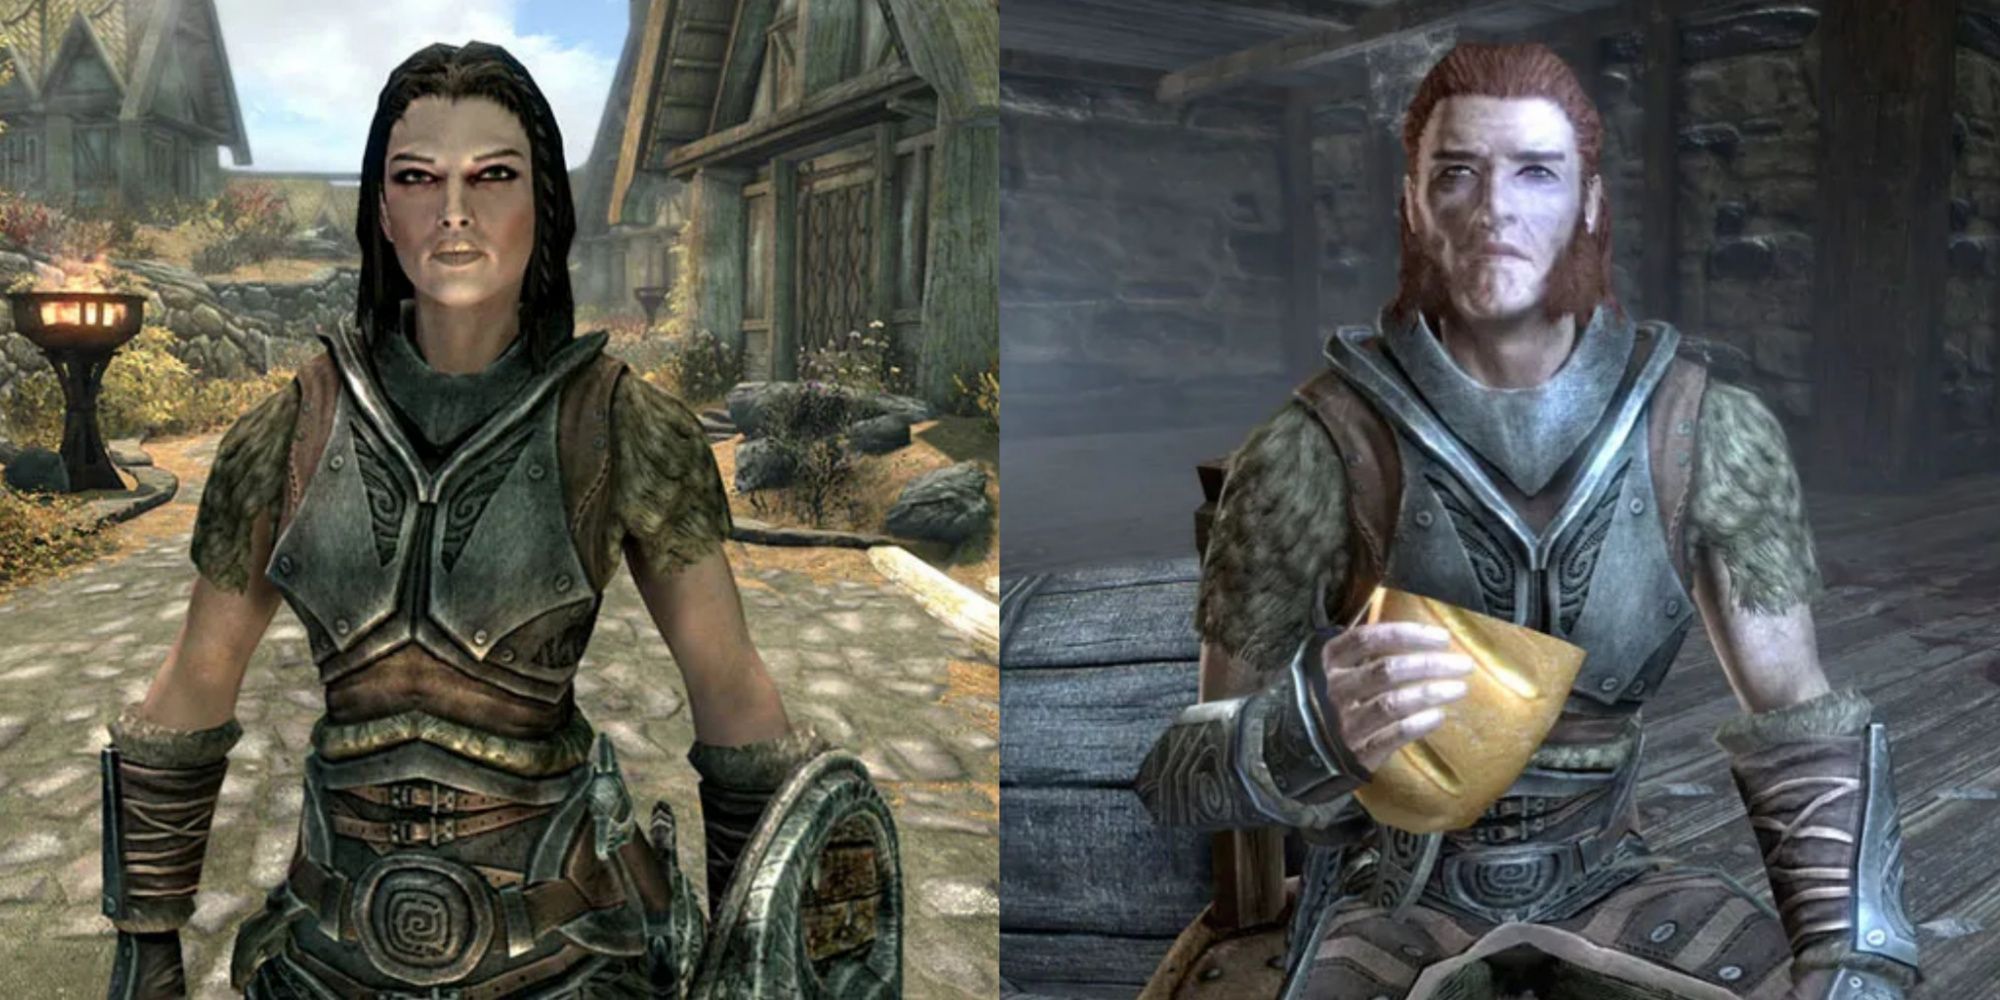 Lydia and Calder from The Elder Scrolls 5: Skyrim